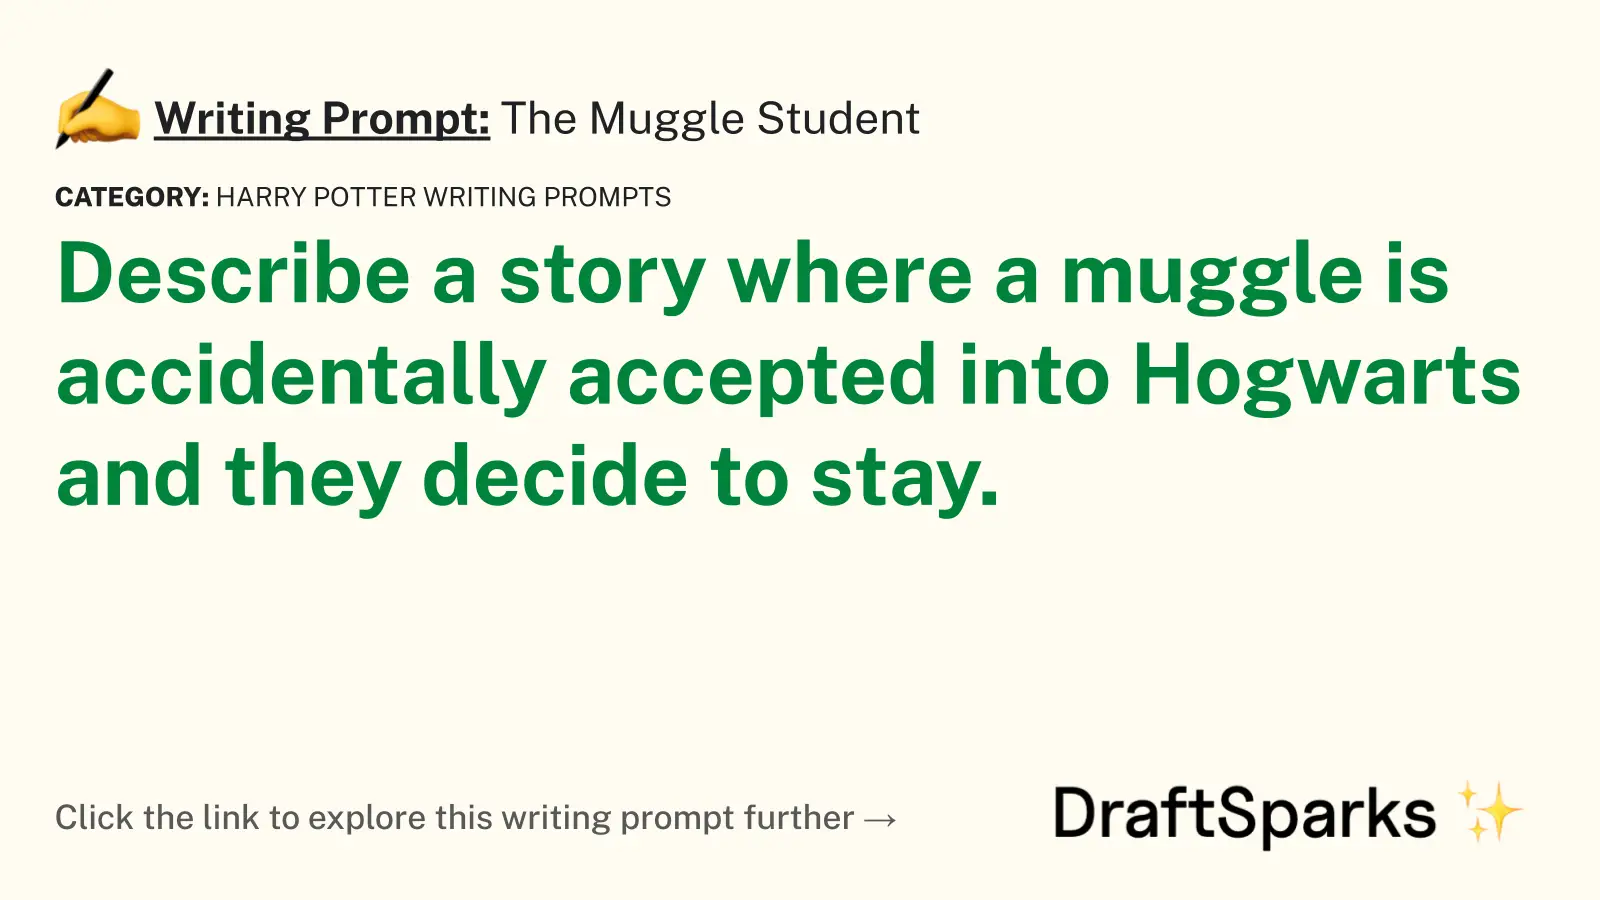 The Muggle Student